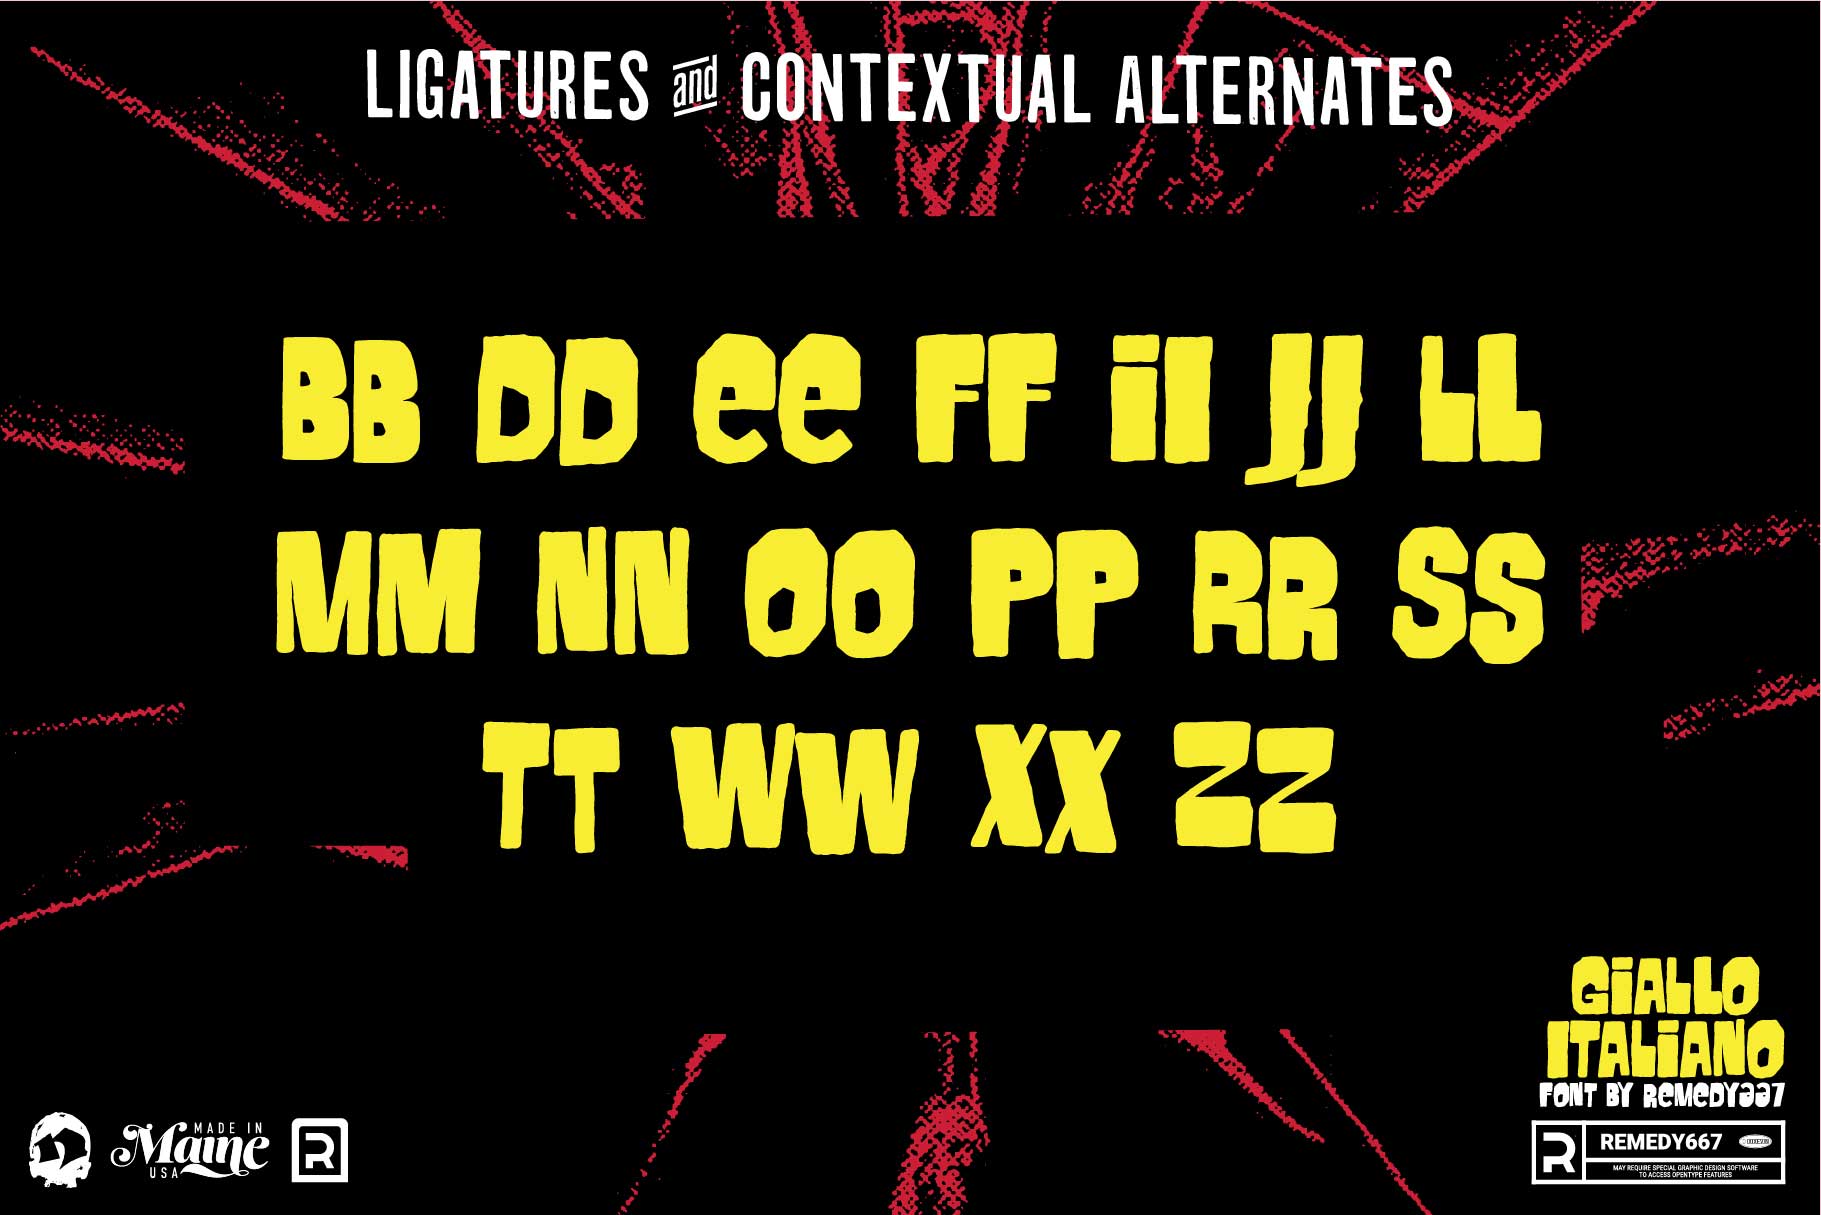 Mid-Century horror film font with ligatures and contextual alternates | RetroSupply Co.